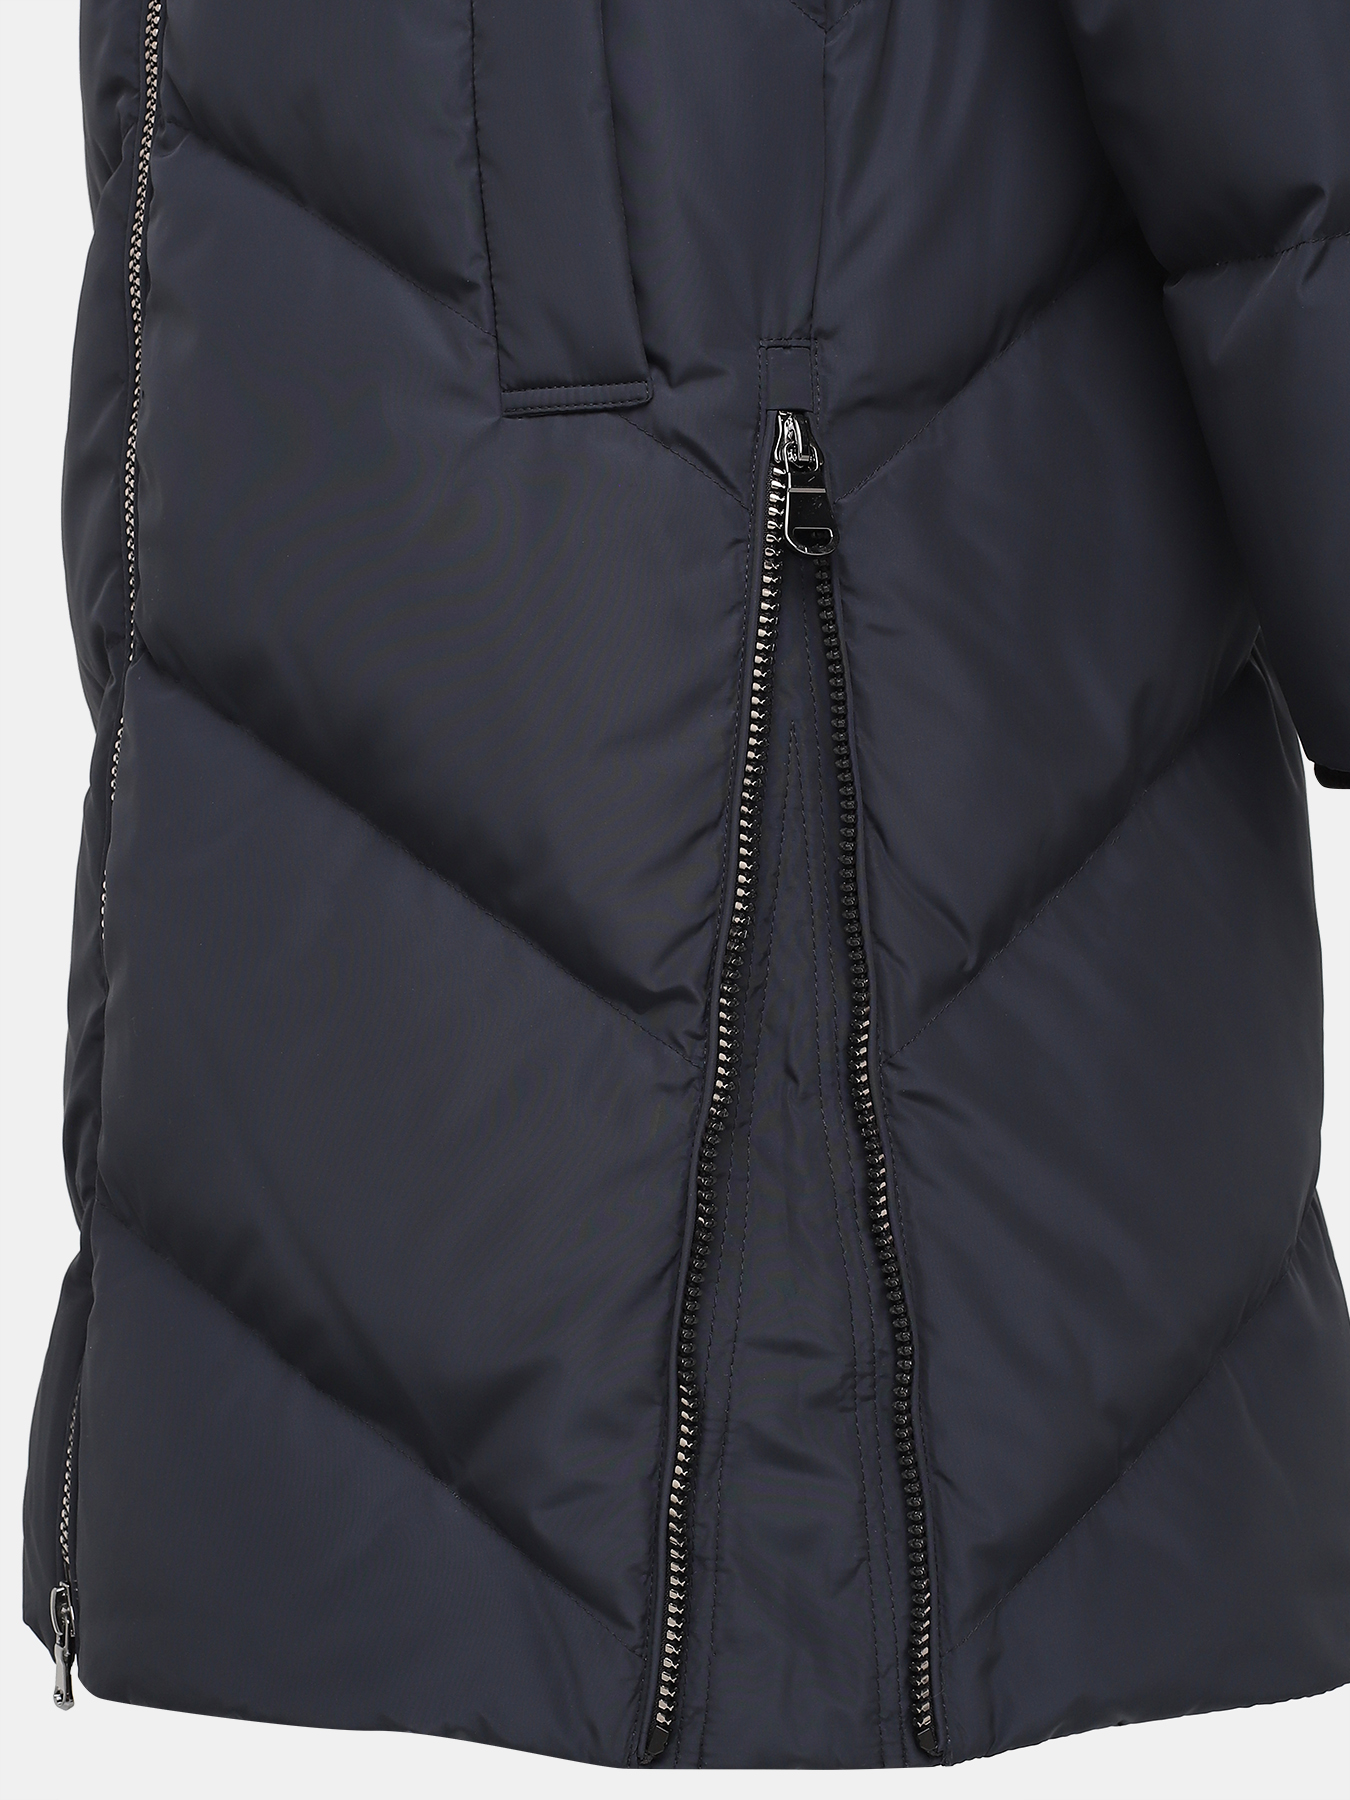 Пальто зимнее AVI 433610-021, цвет темно-синий, размер 46 - фото 4